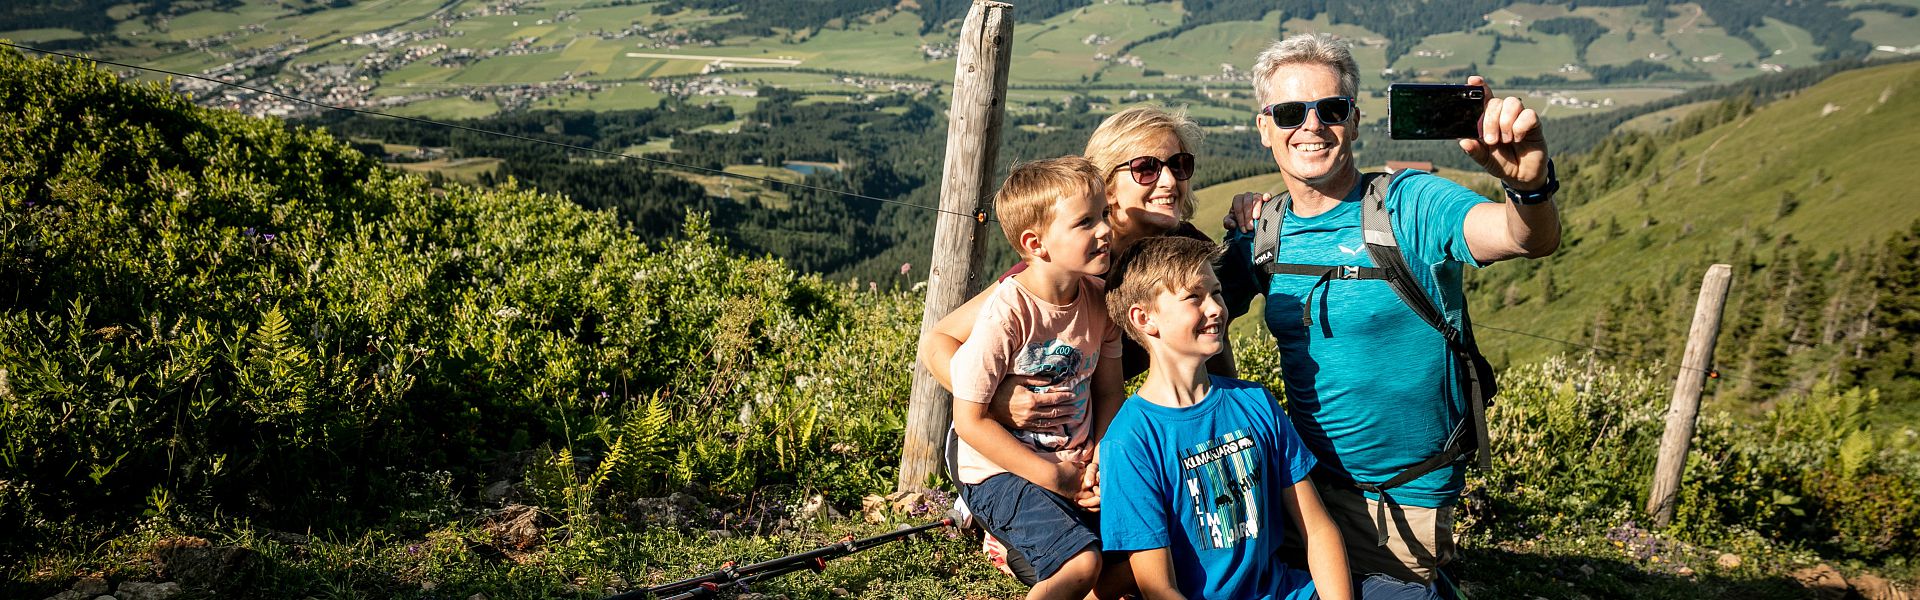 Familie macht Selfie beim Wandern - Region St. Johann in Tirol